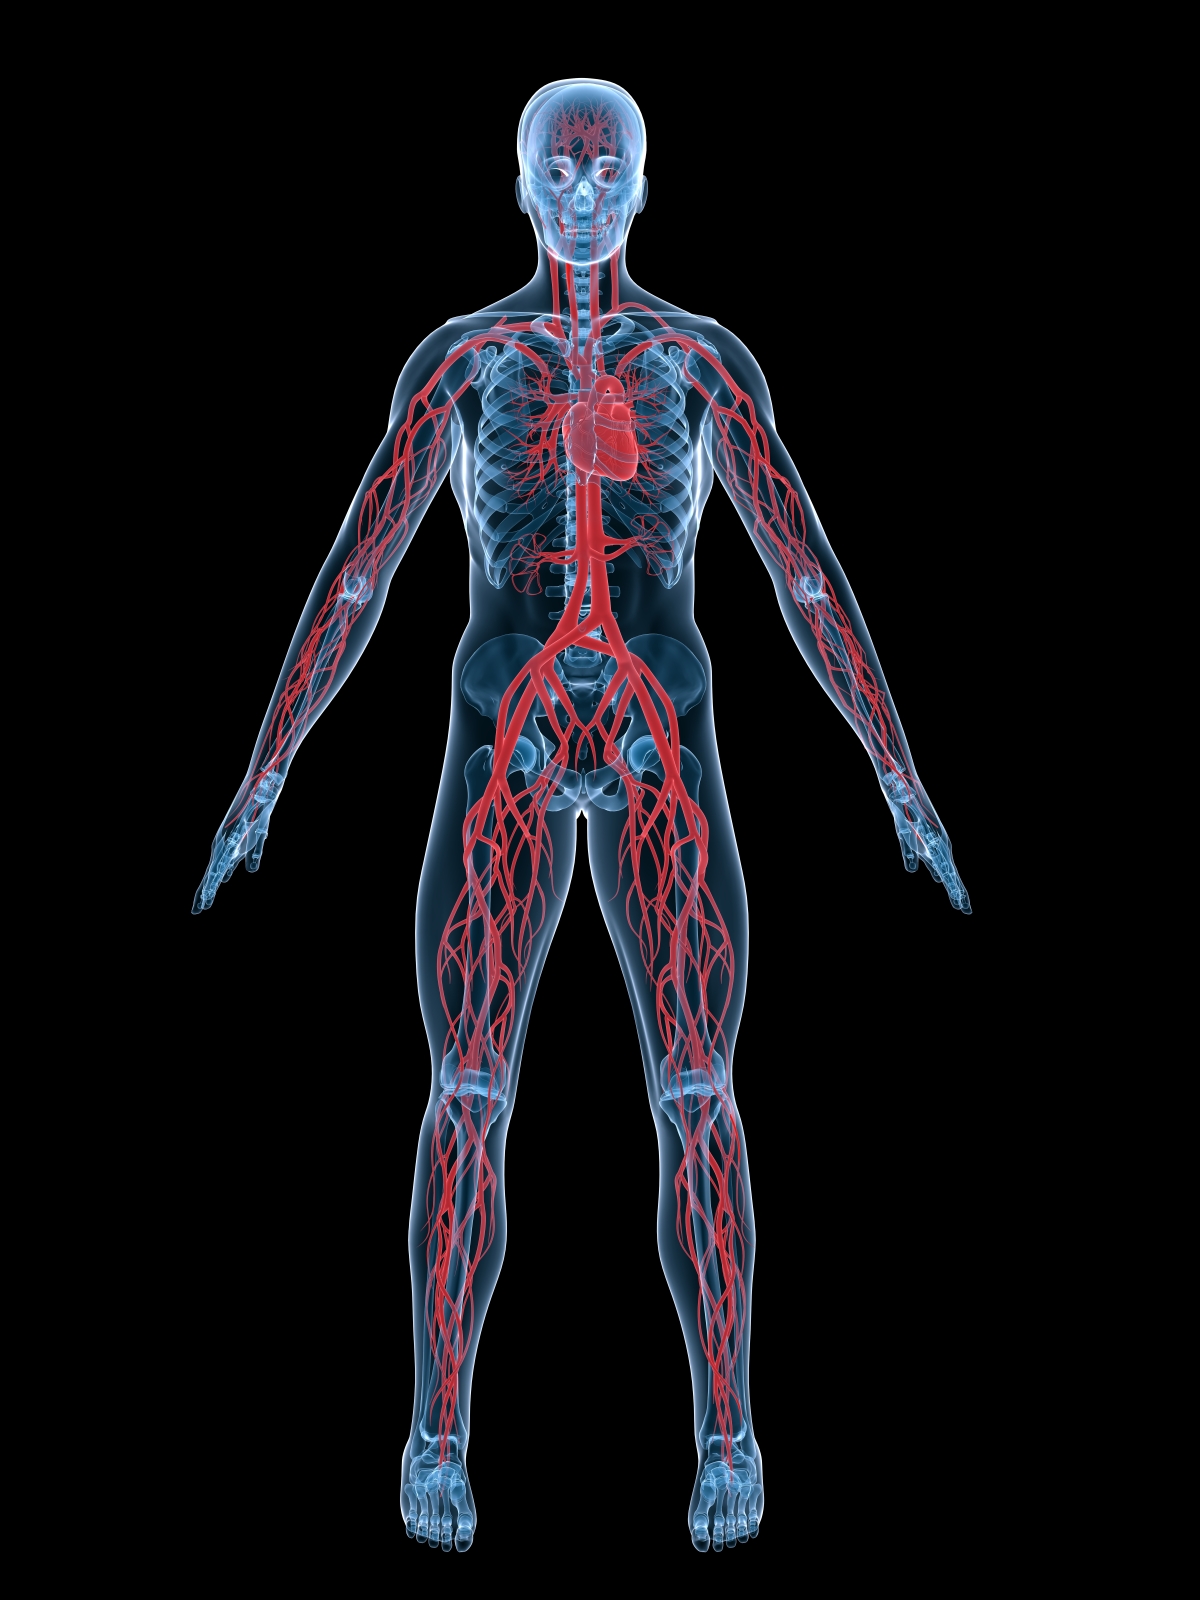 [DIAGRAM] Diagram Of Human Circulatory System For Kids - MYDIAGRAM.ONLINE